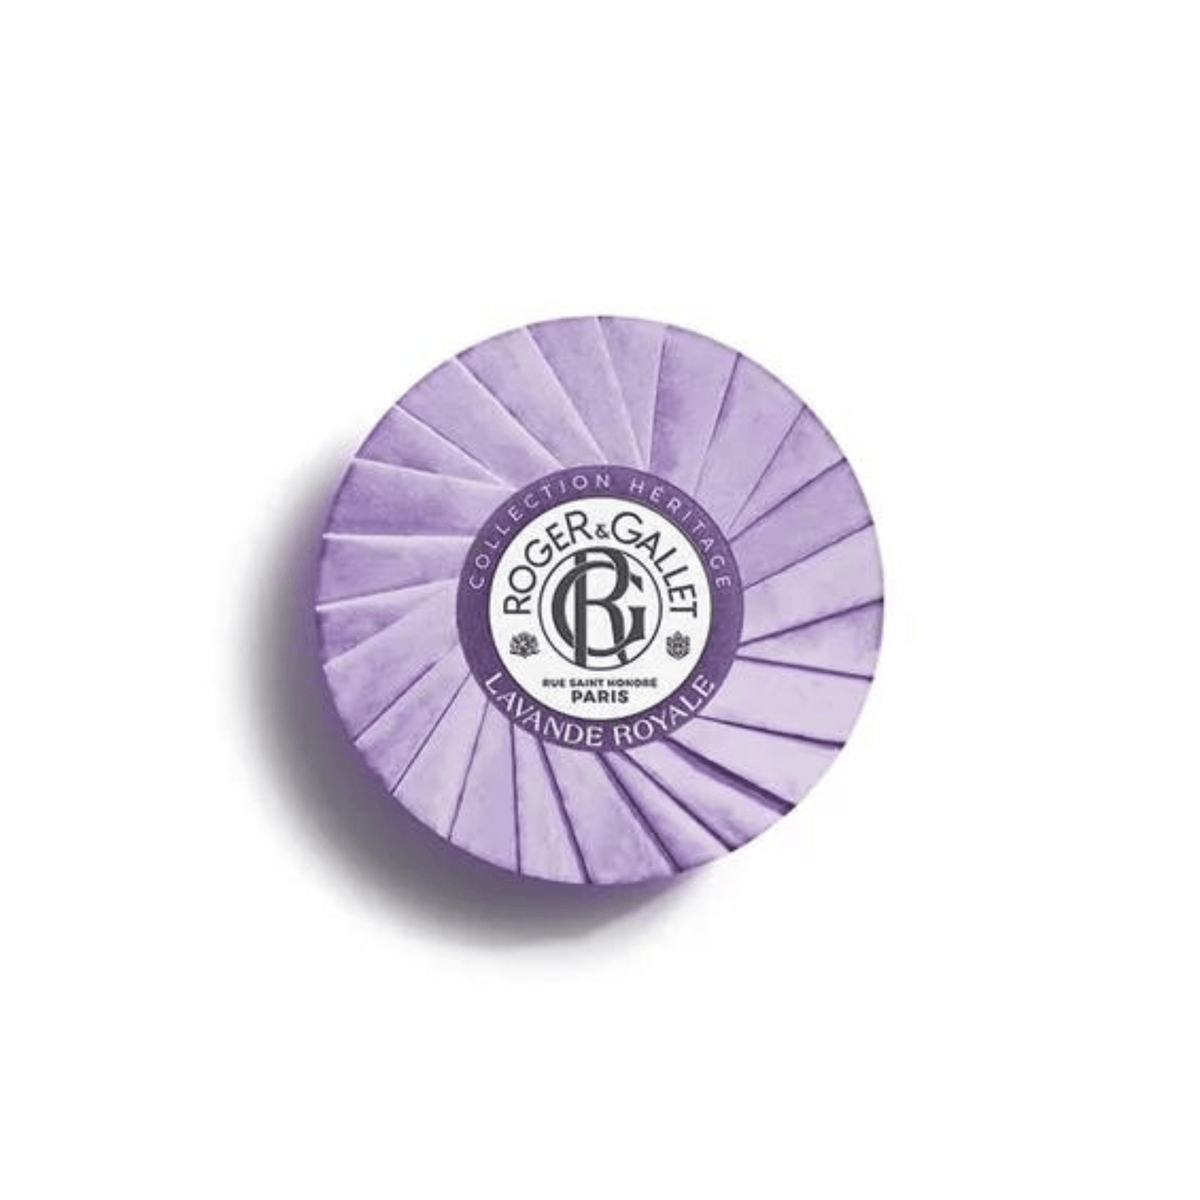 Primary Image of Lavande Royale (Lavender) Wellbeing Soap